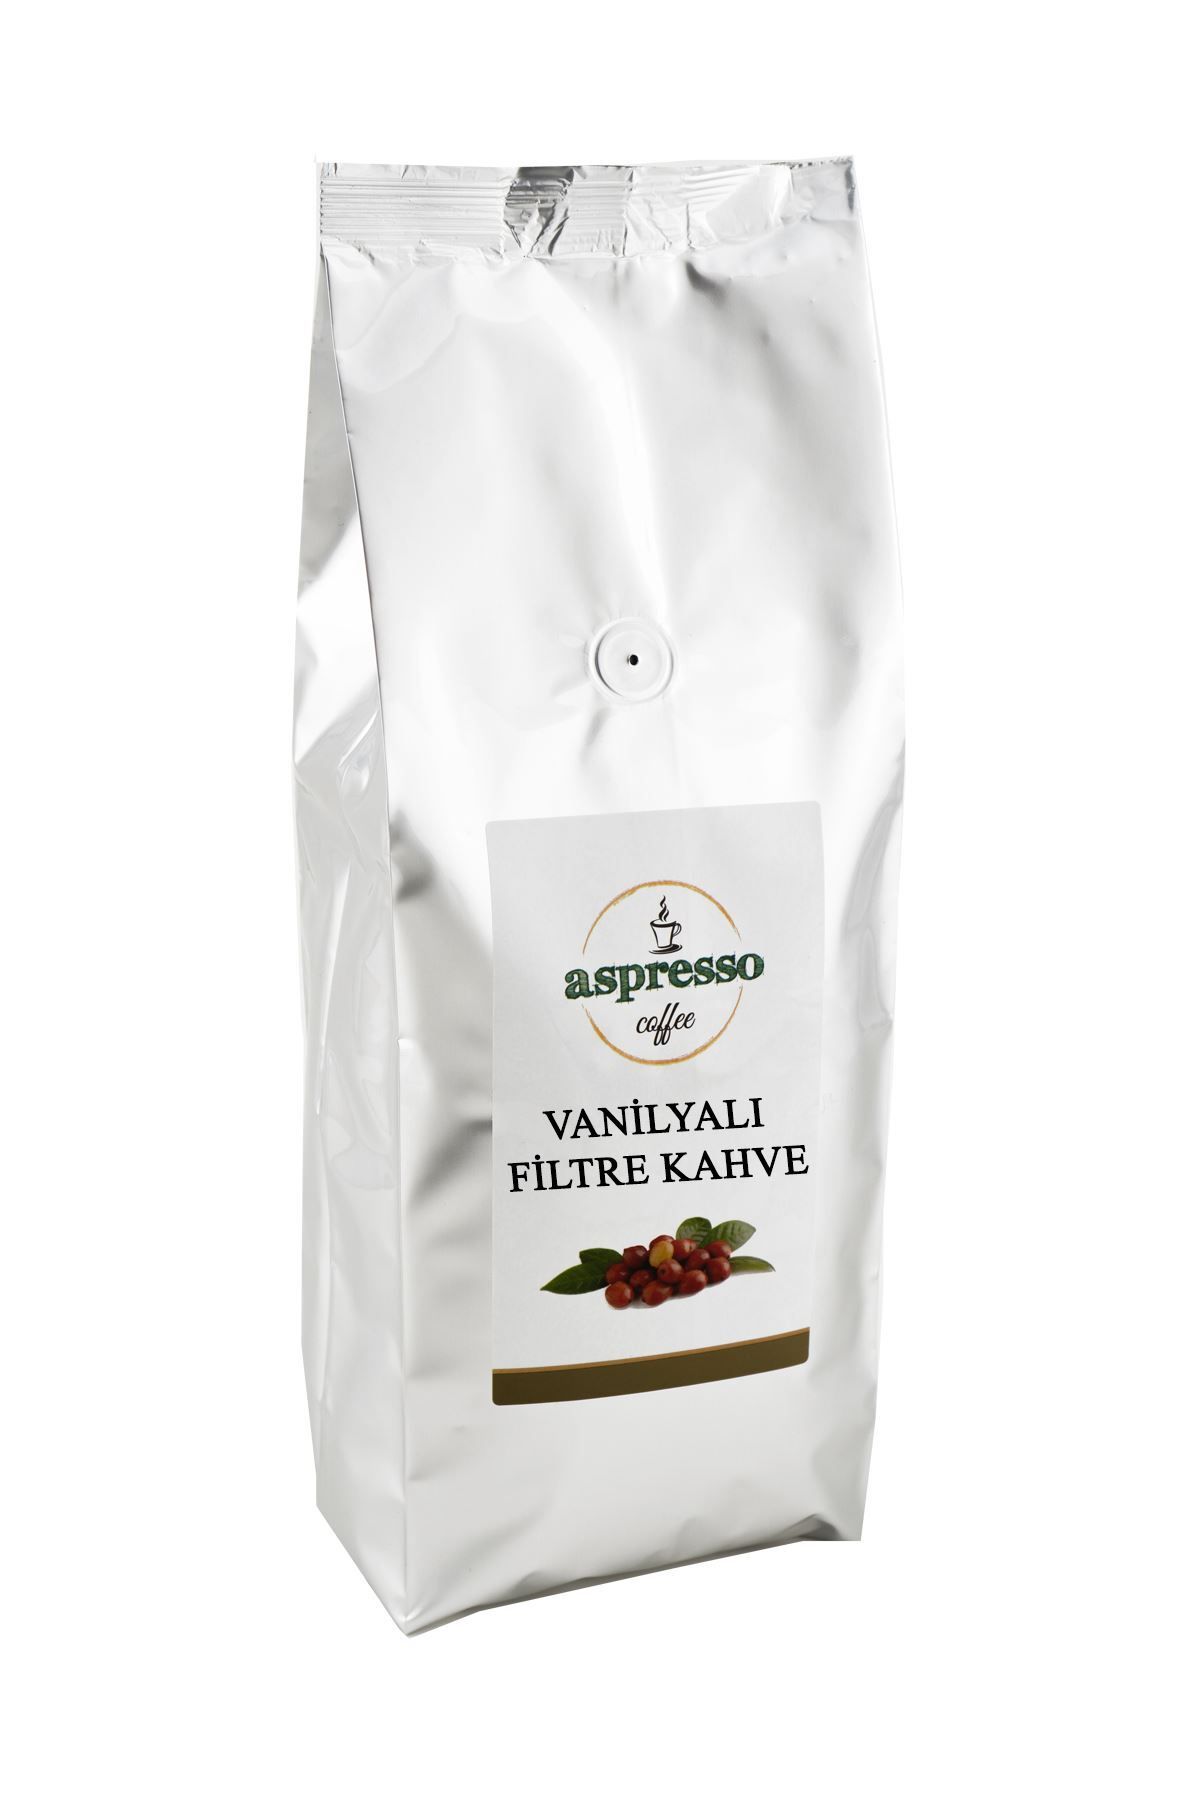 aspresso Vanilyalı Filtre Kahve 250 Gr.